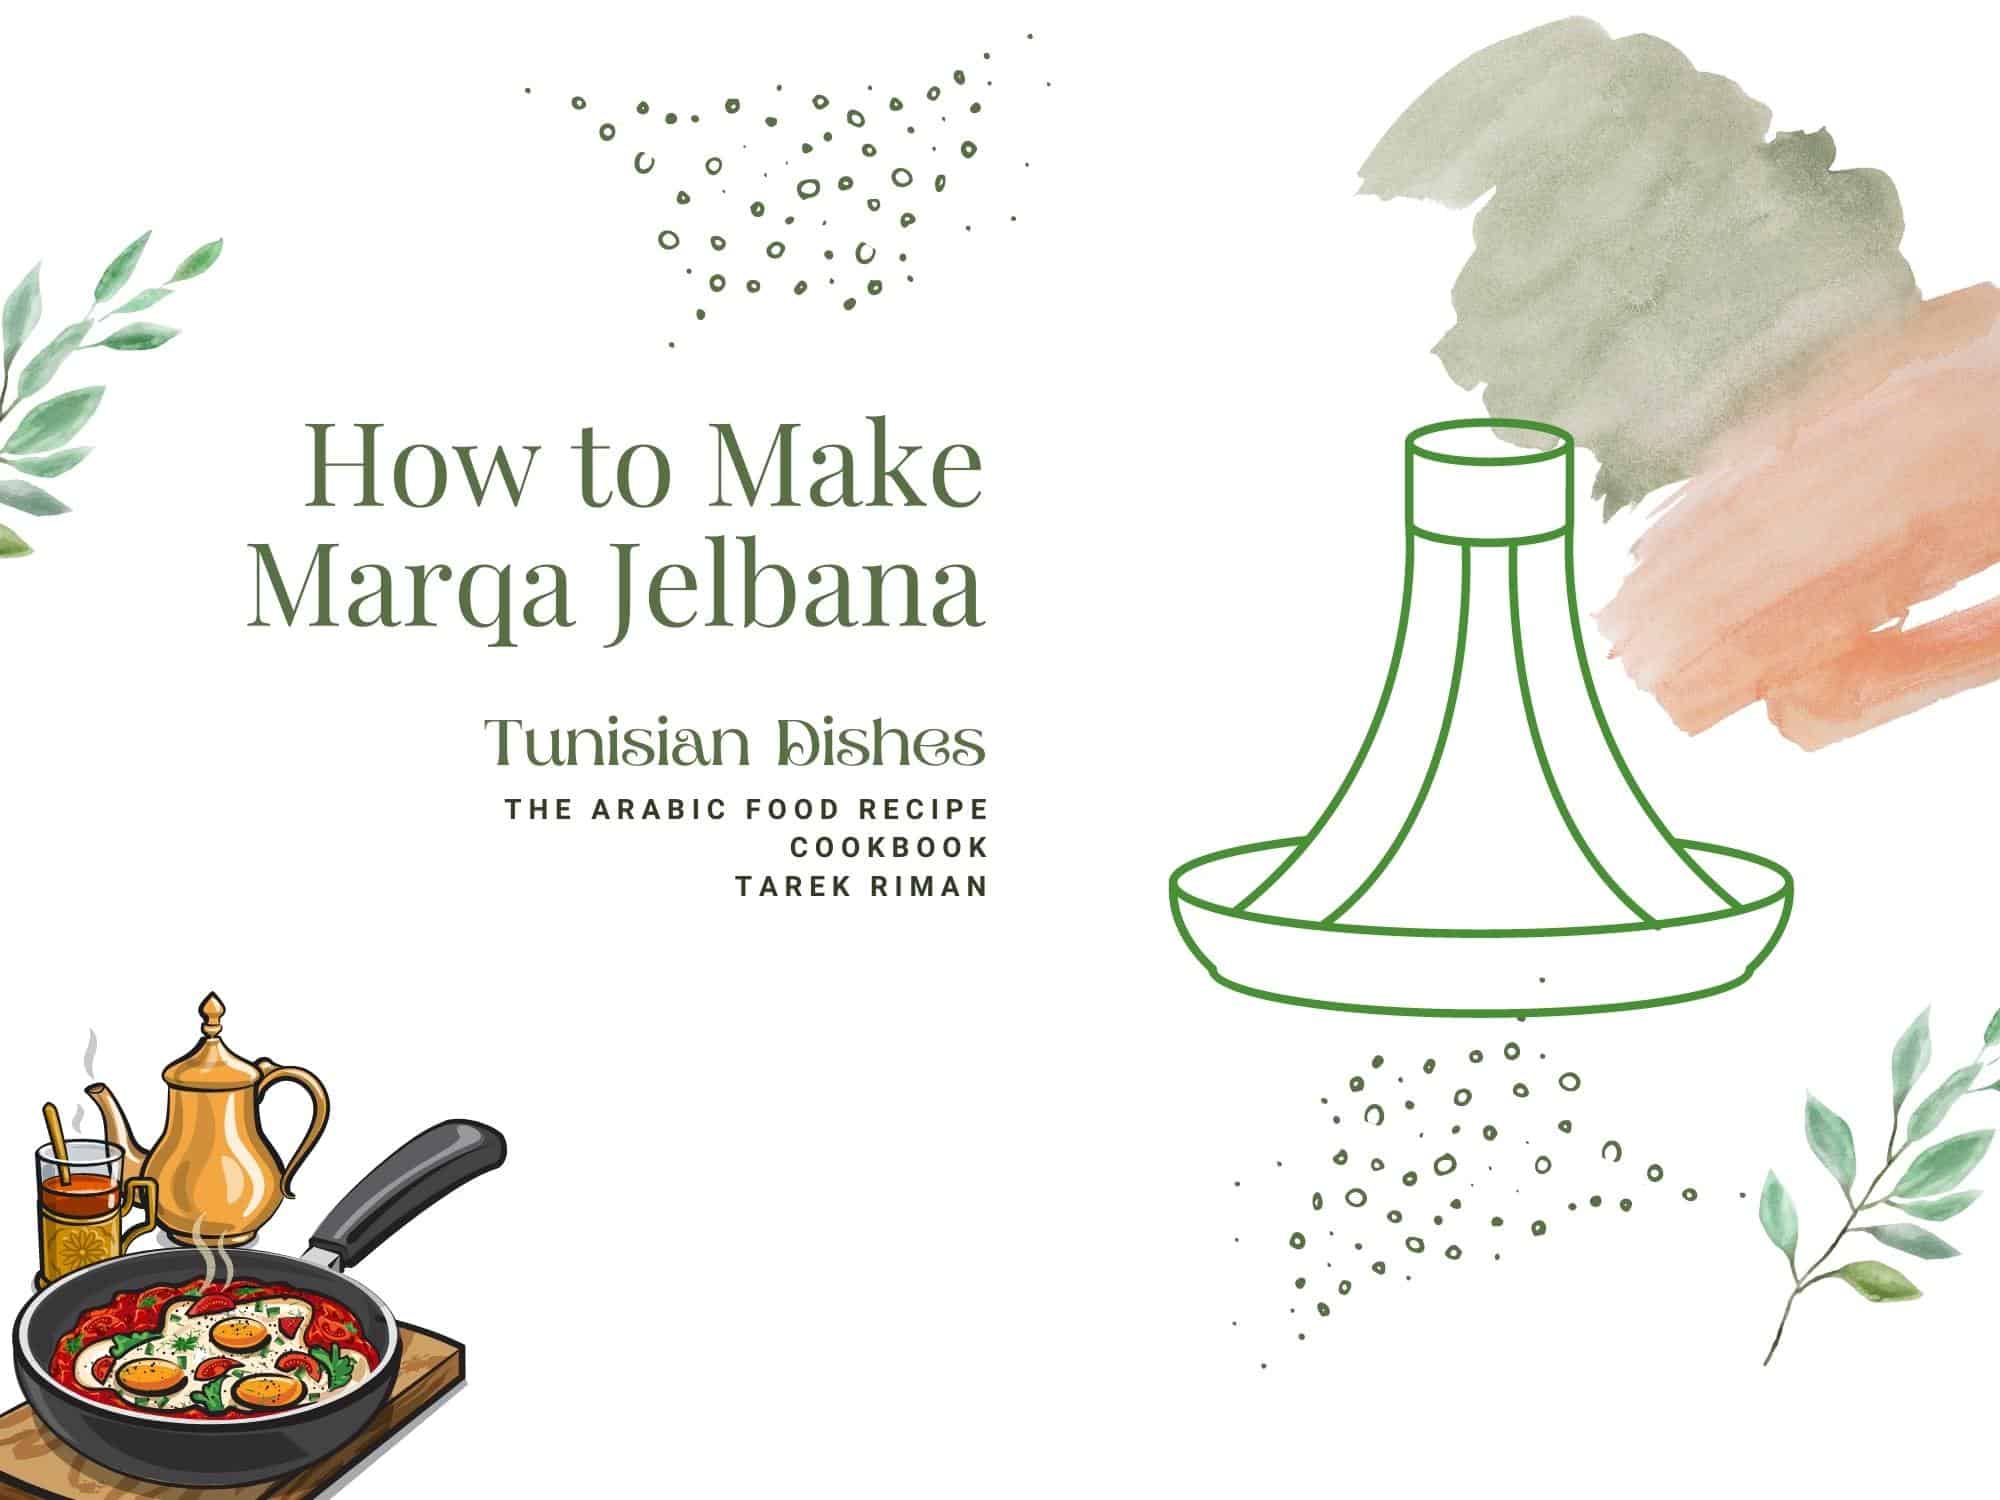 How to Make Marqa Jelbana